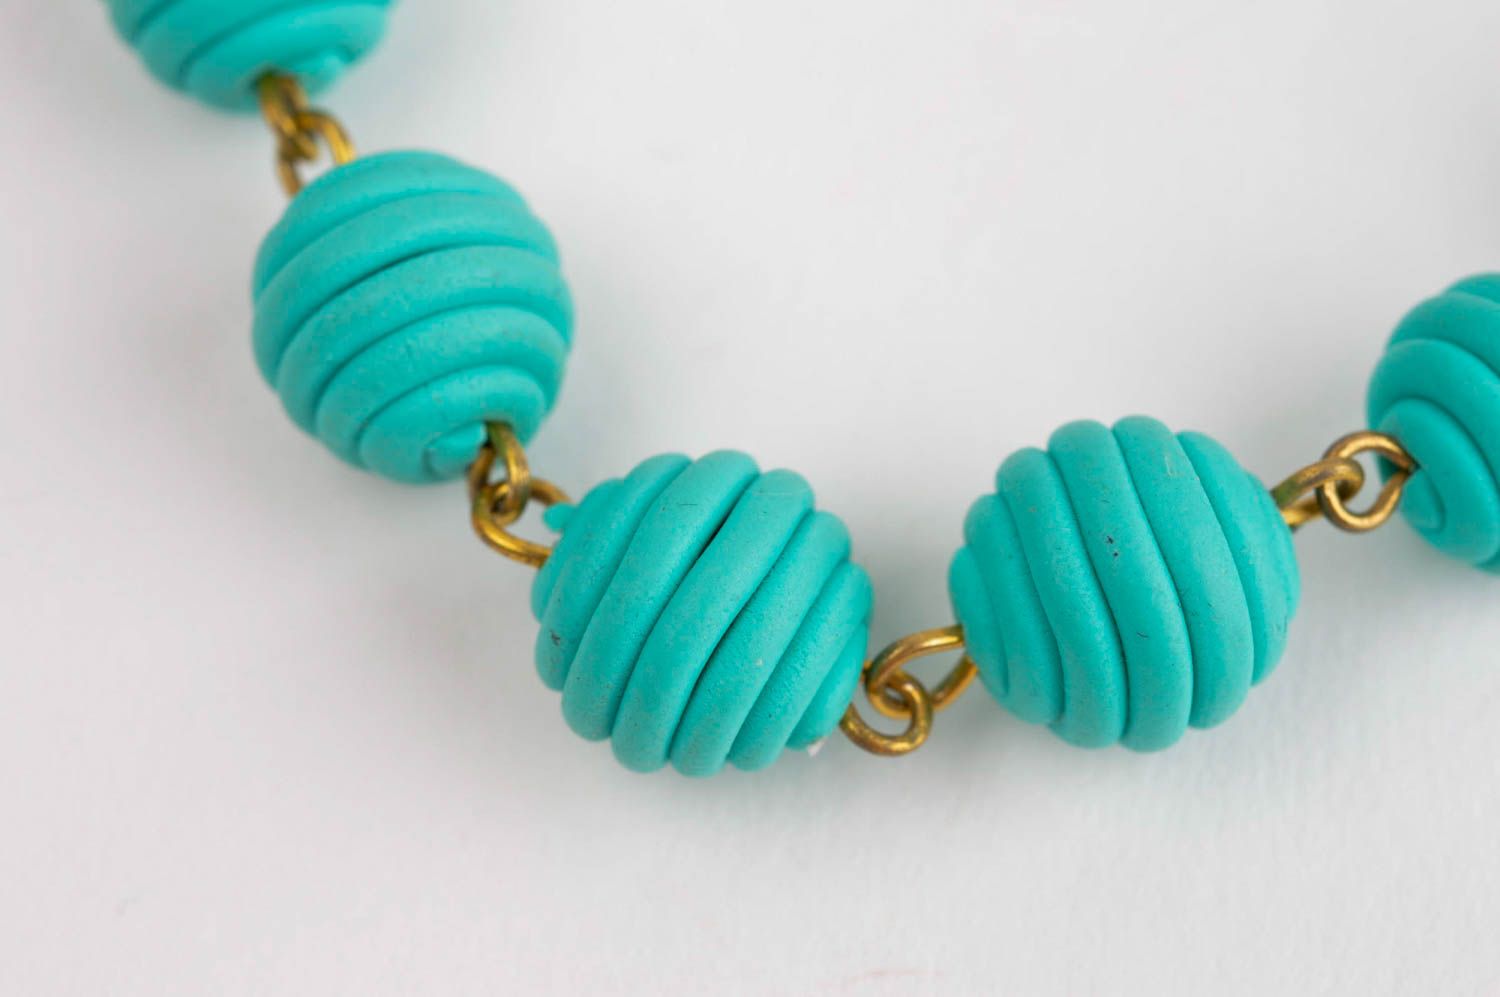 Handmade bracelet designer bracelet clay jewelry unusual accessory gift ideas photo 5